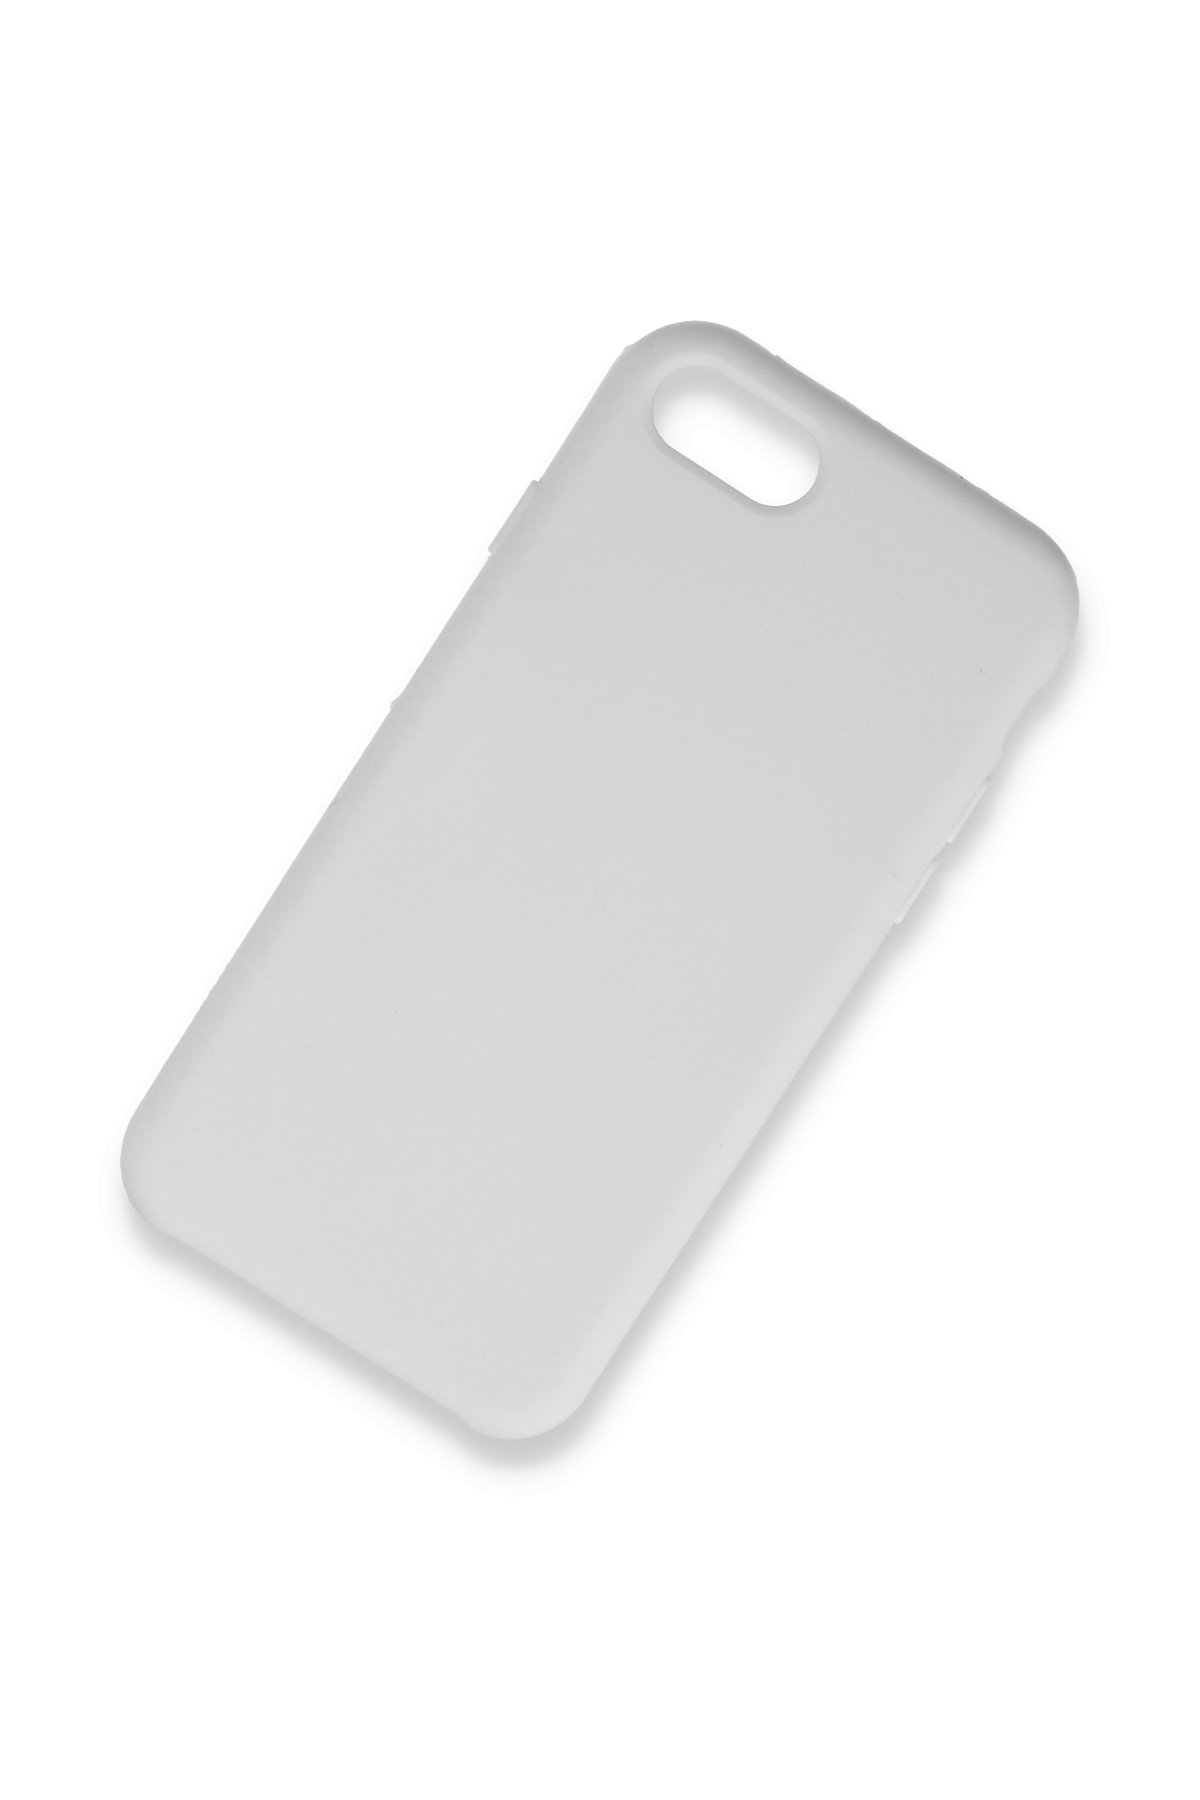 Newface iPhone 8 Plus Kılıf Optimum Silikon - Sky Blue